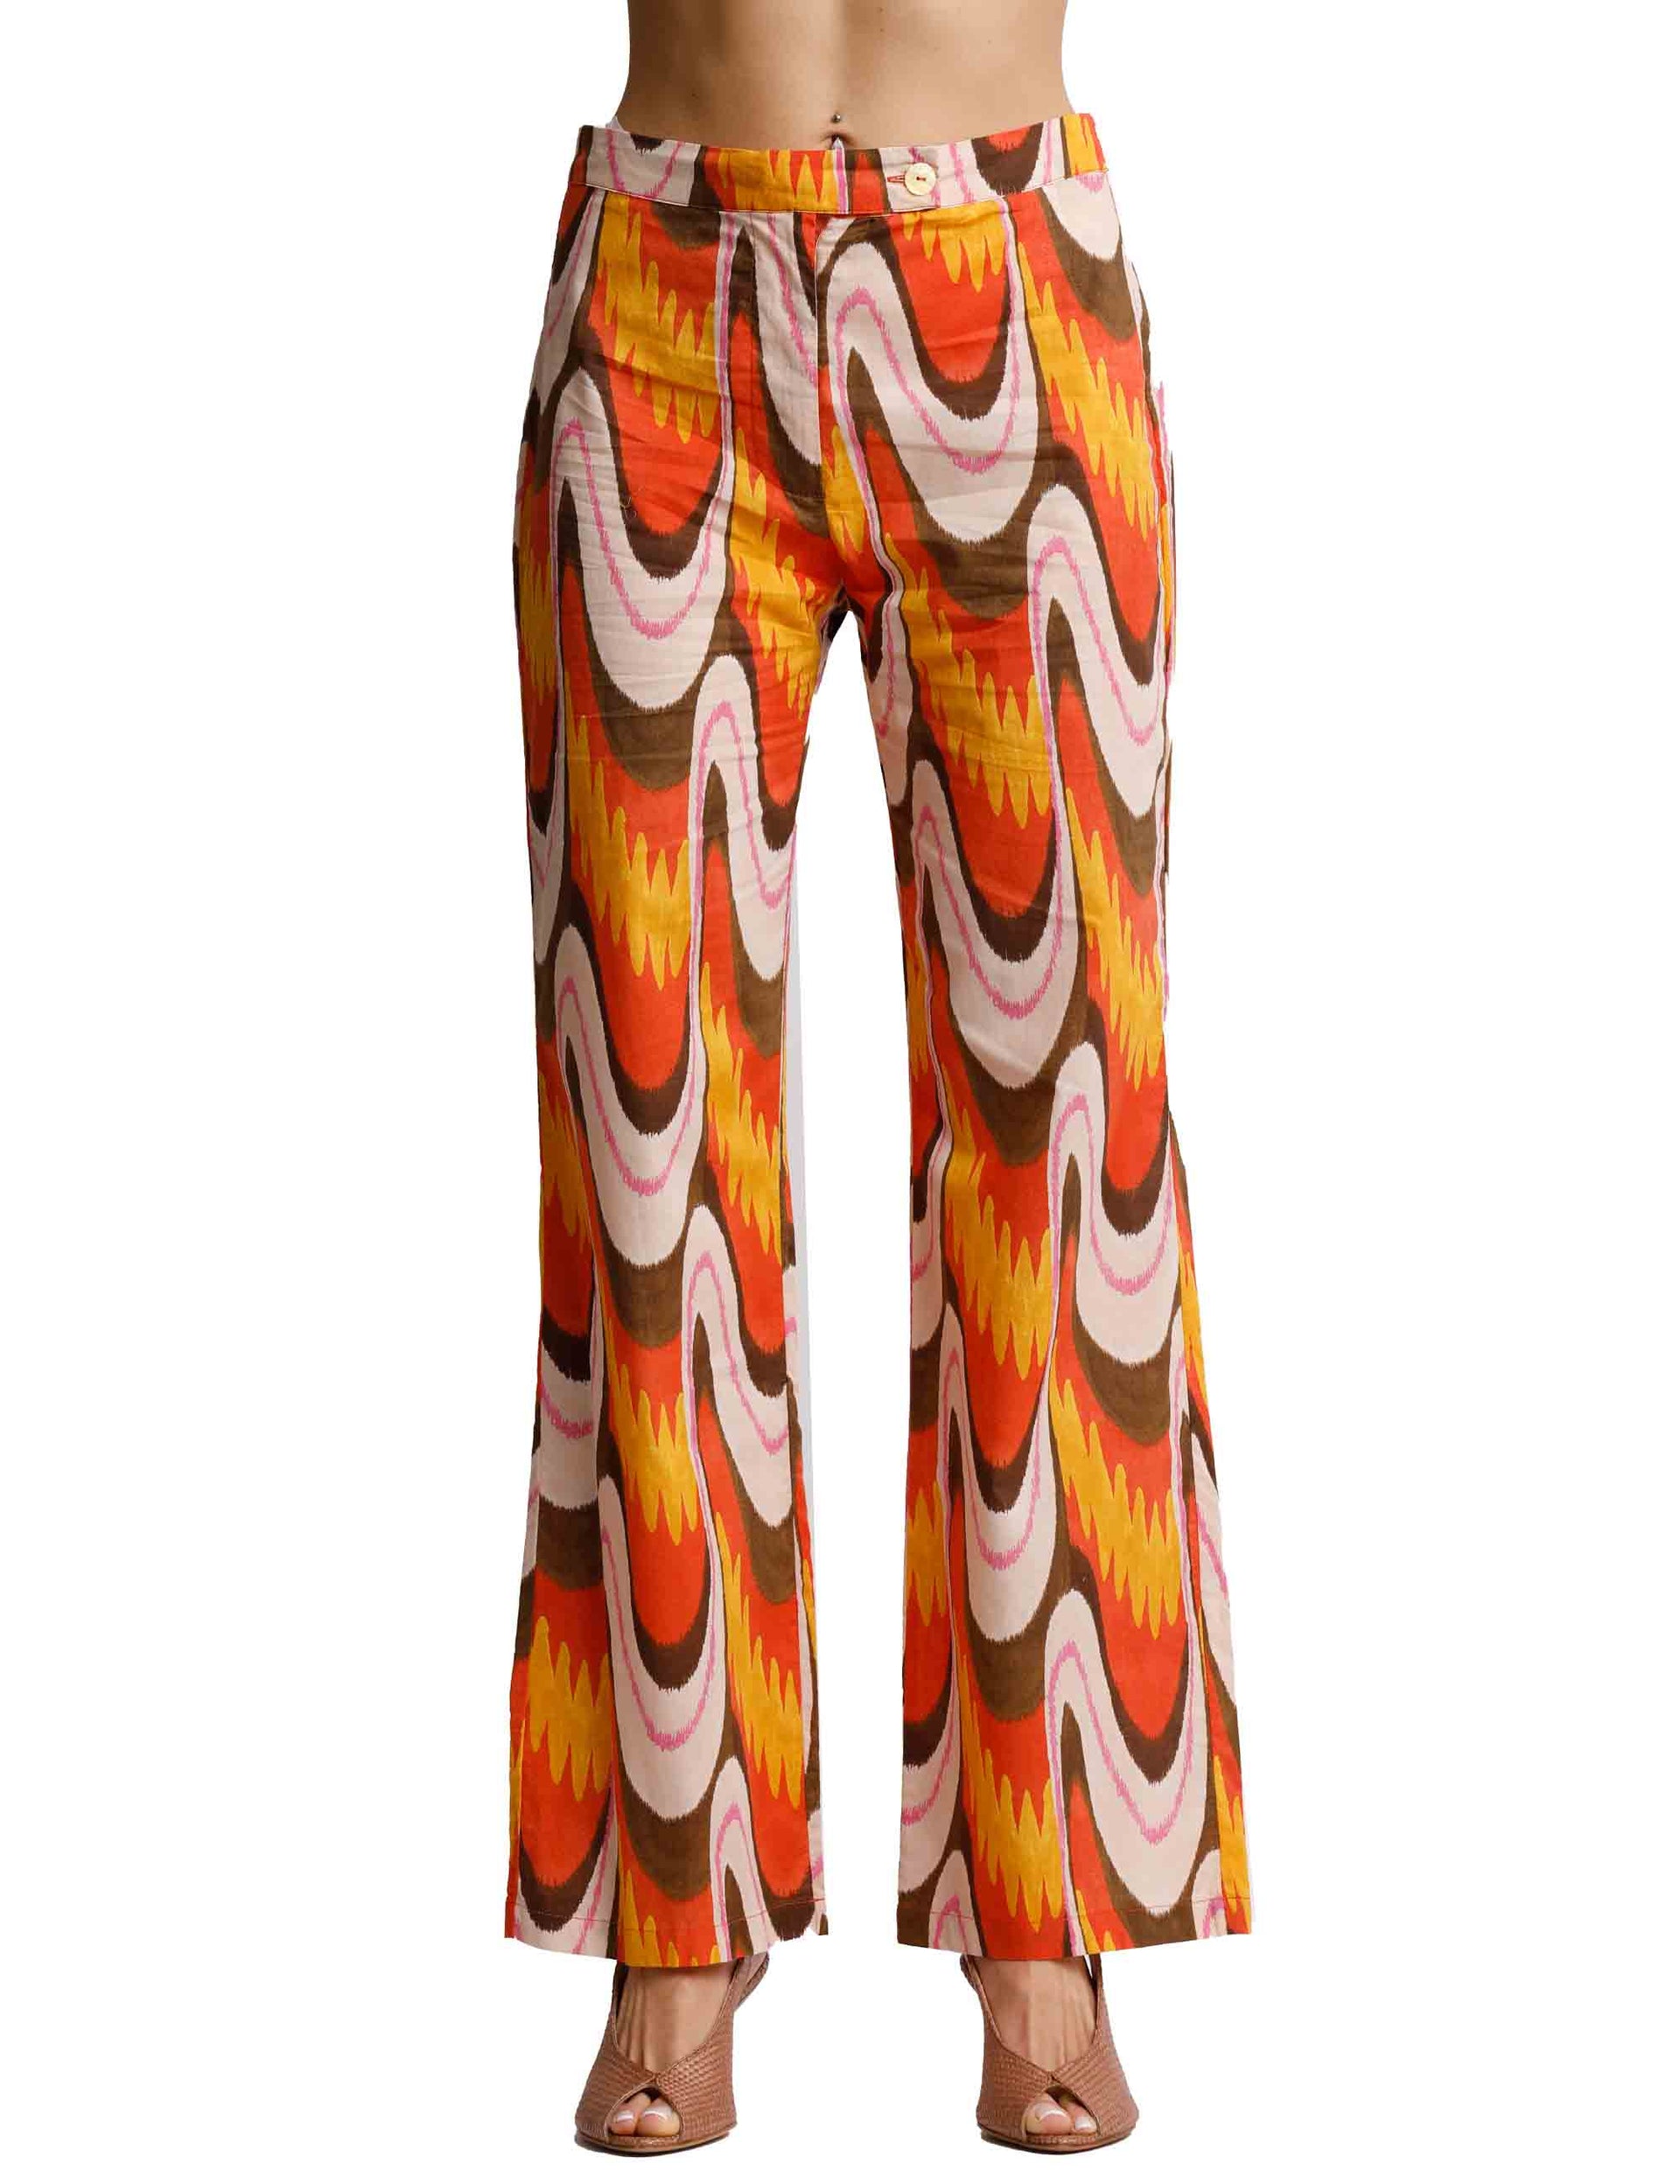 Pantaloni donna Ikat Wave Muslin in cotone arancione a fantasia